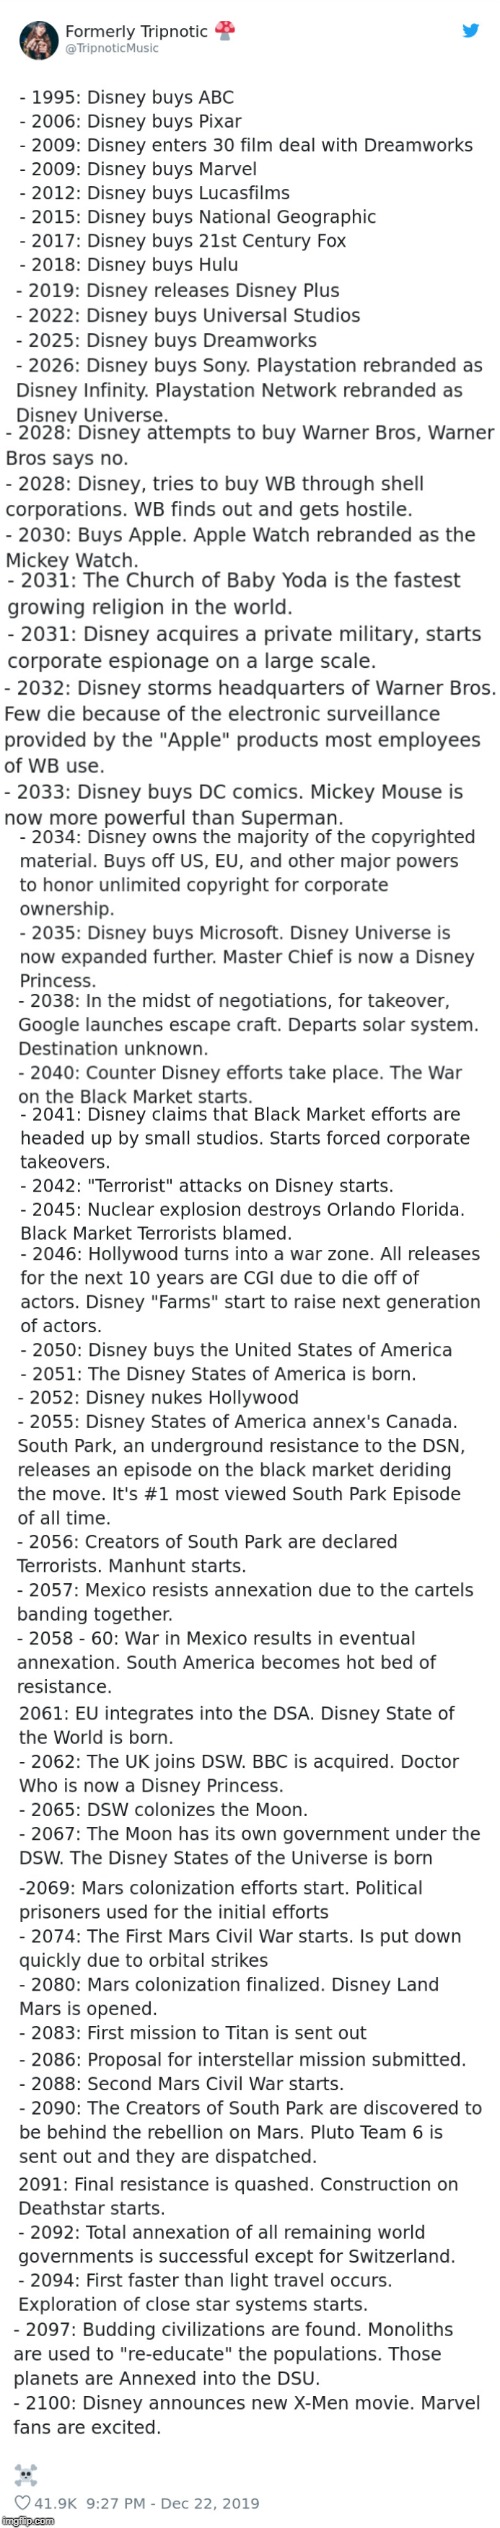 The Disney Takeover (Creddit to Dreux Moreland and boredpanda.com ...